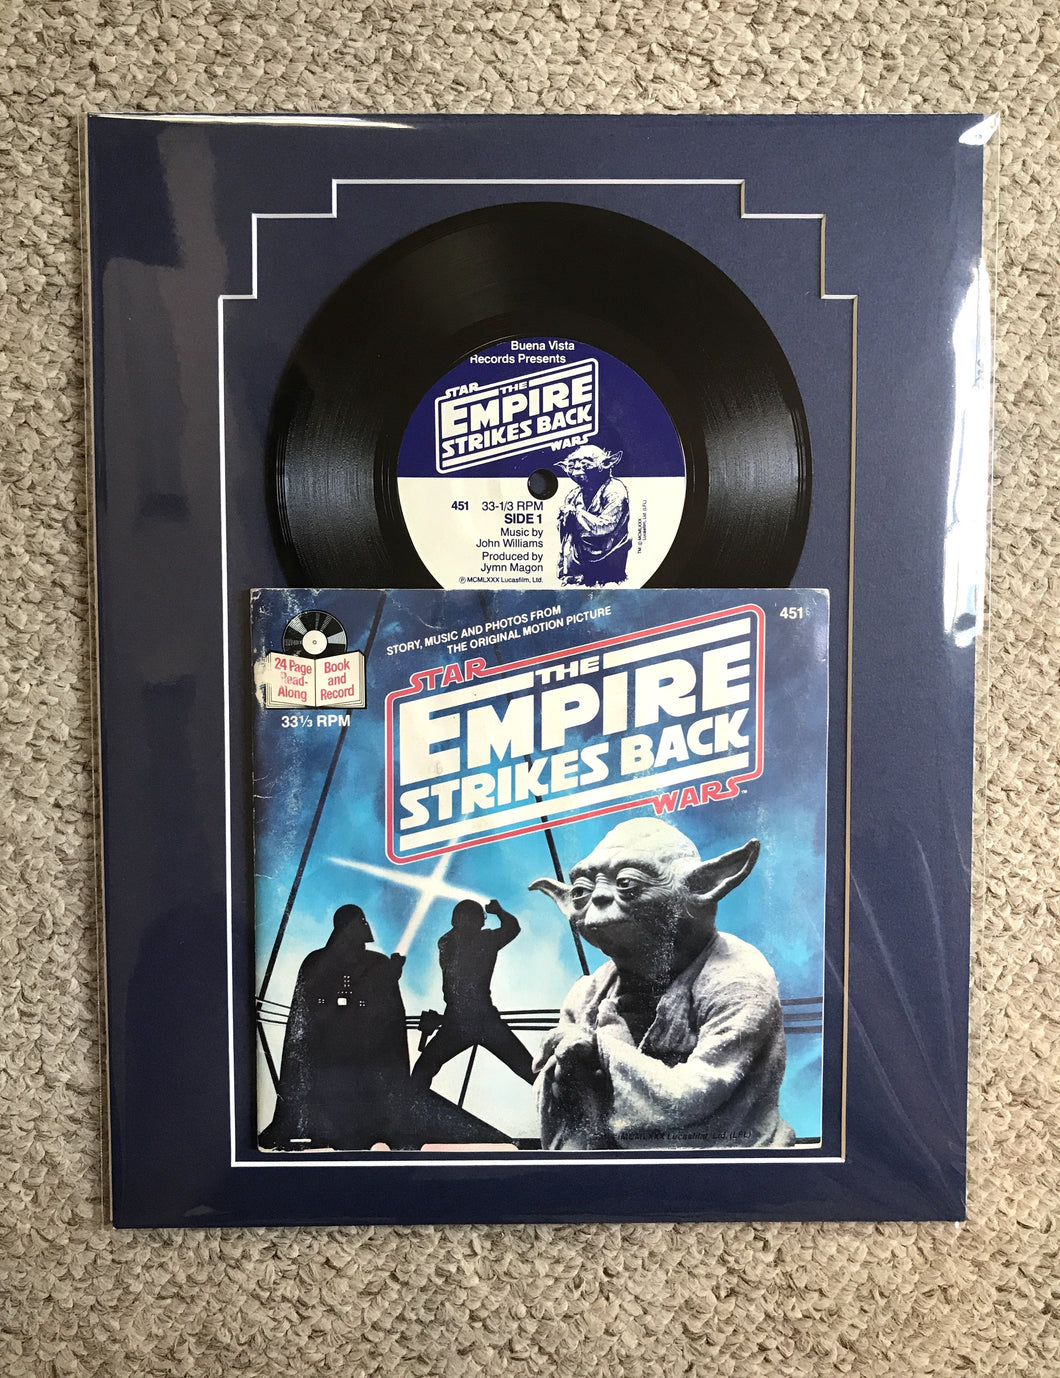 Original 1980 record and book, “the empire strikes back”